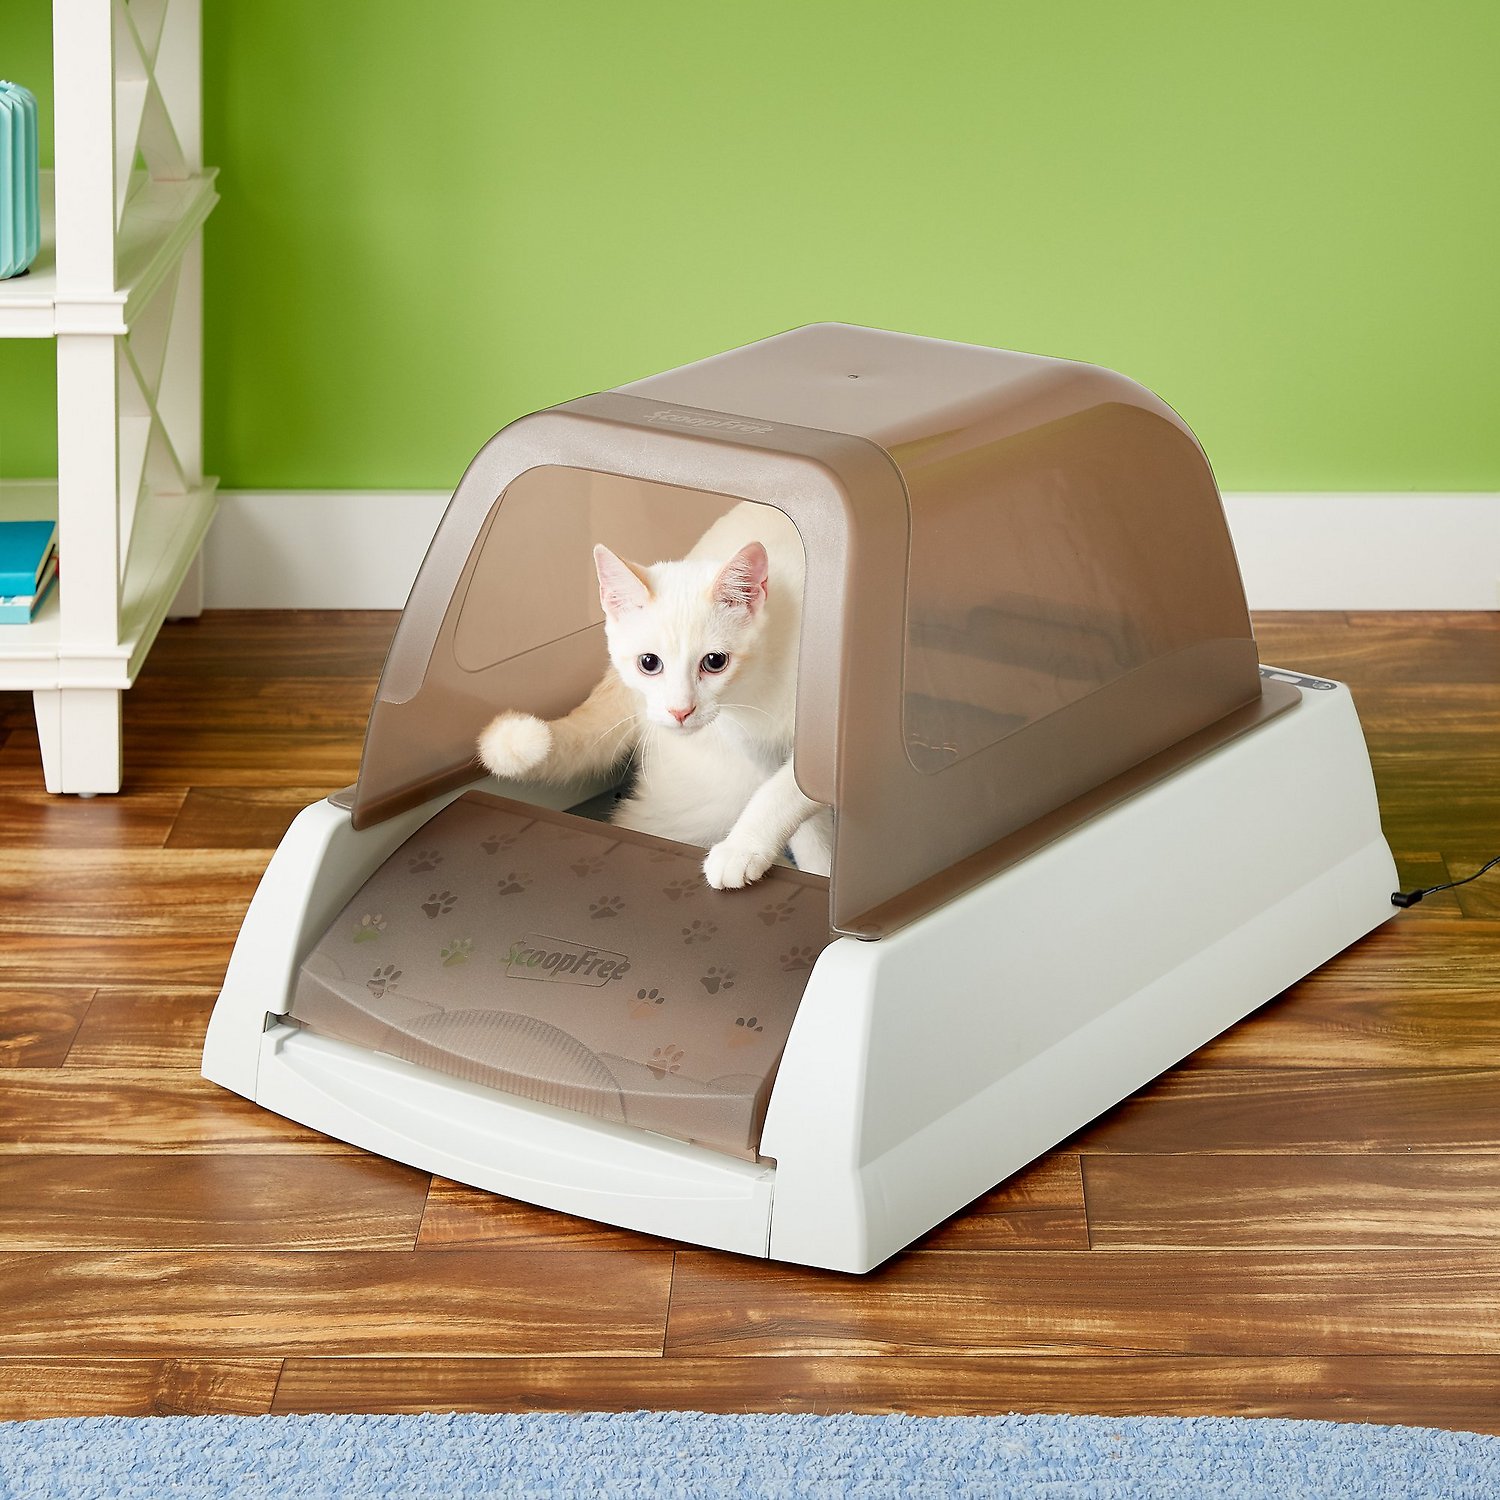 PetSafe ScoopFree Ultra SelfCleaning Cat Litter Box, Covered